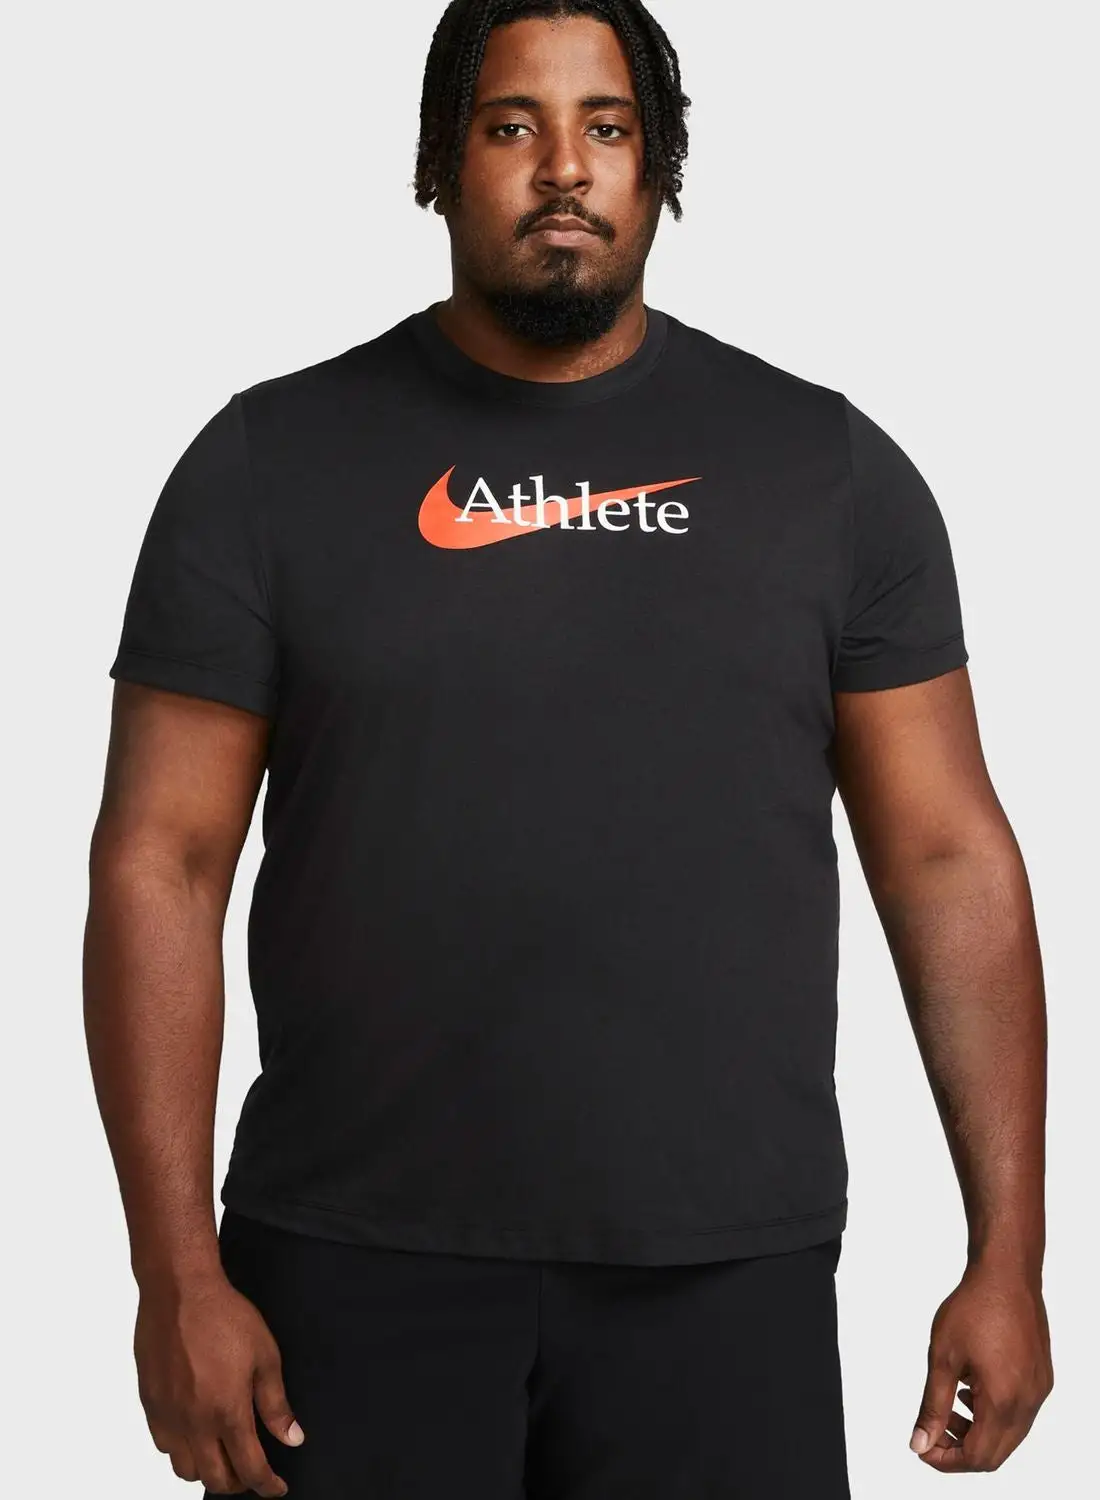 Nike Athlete Swoosh T-Shirt